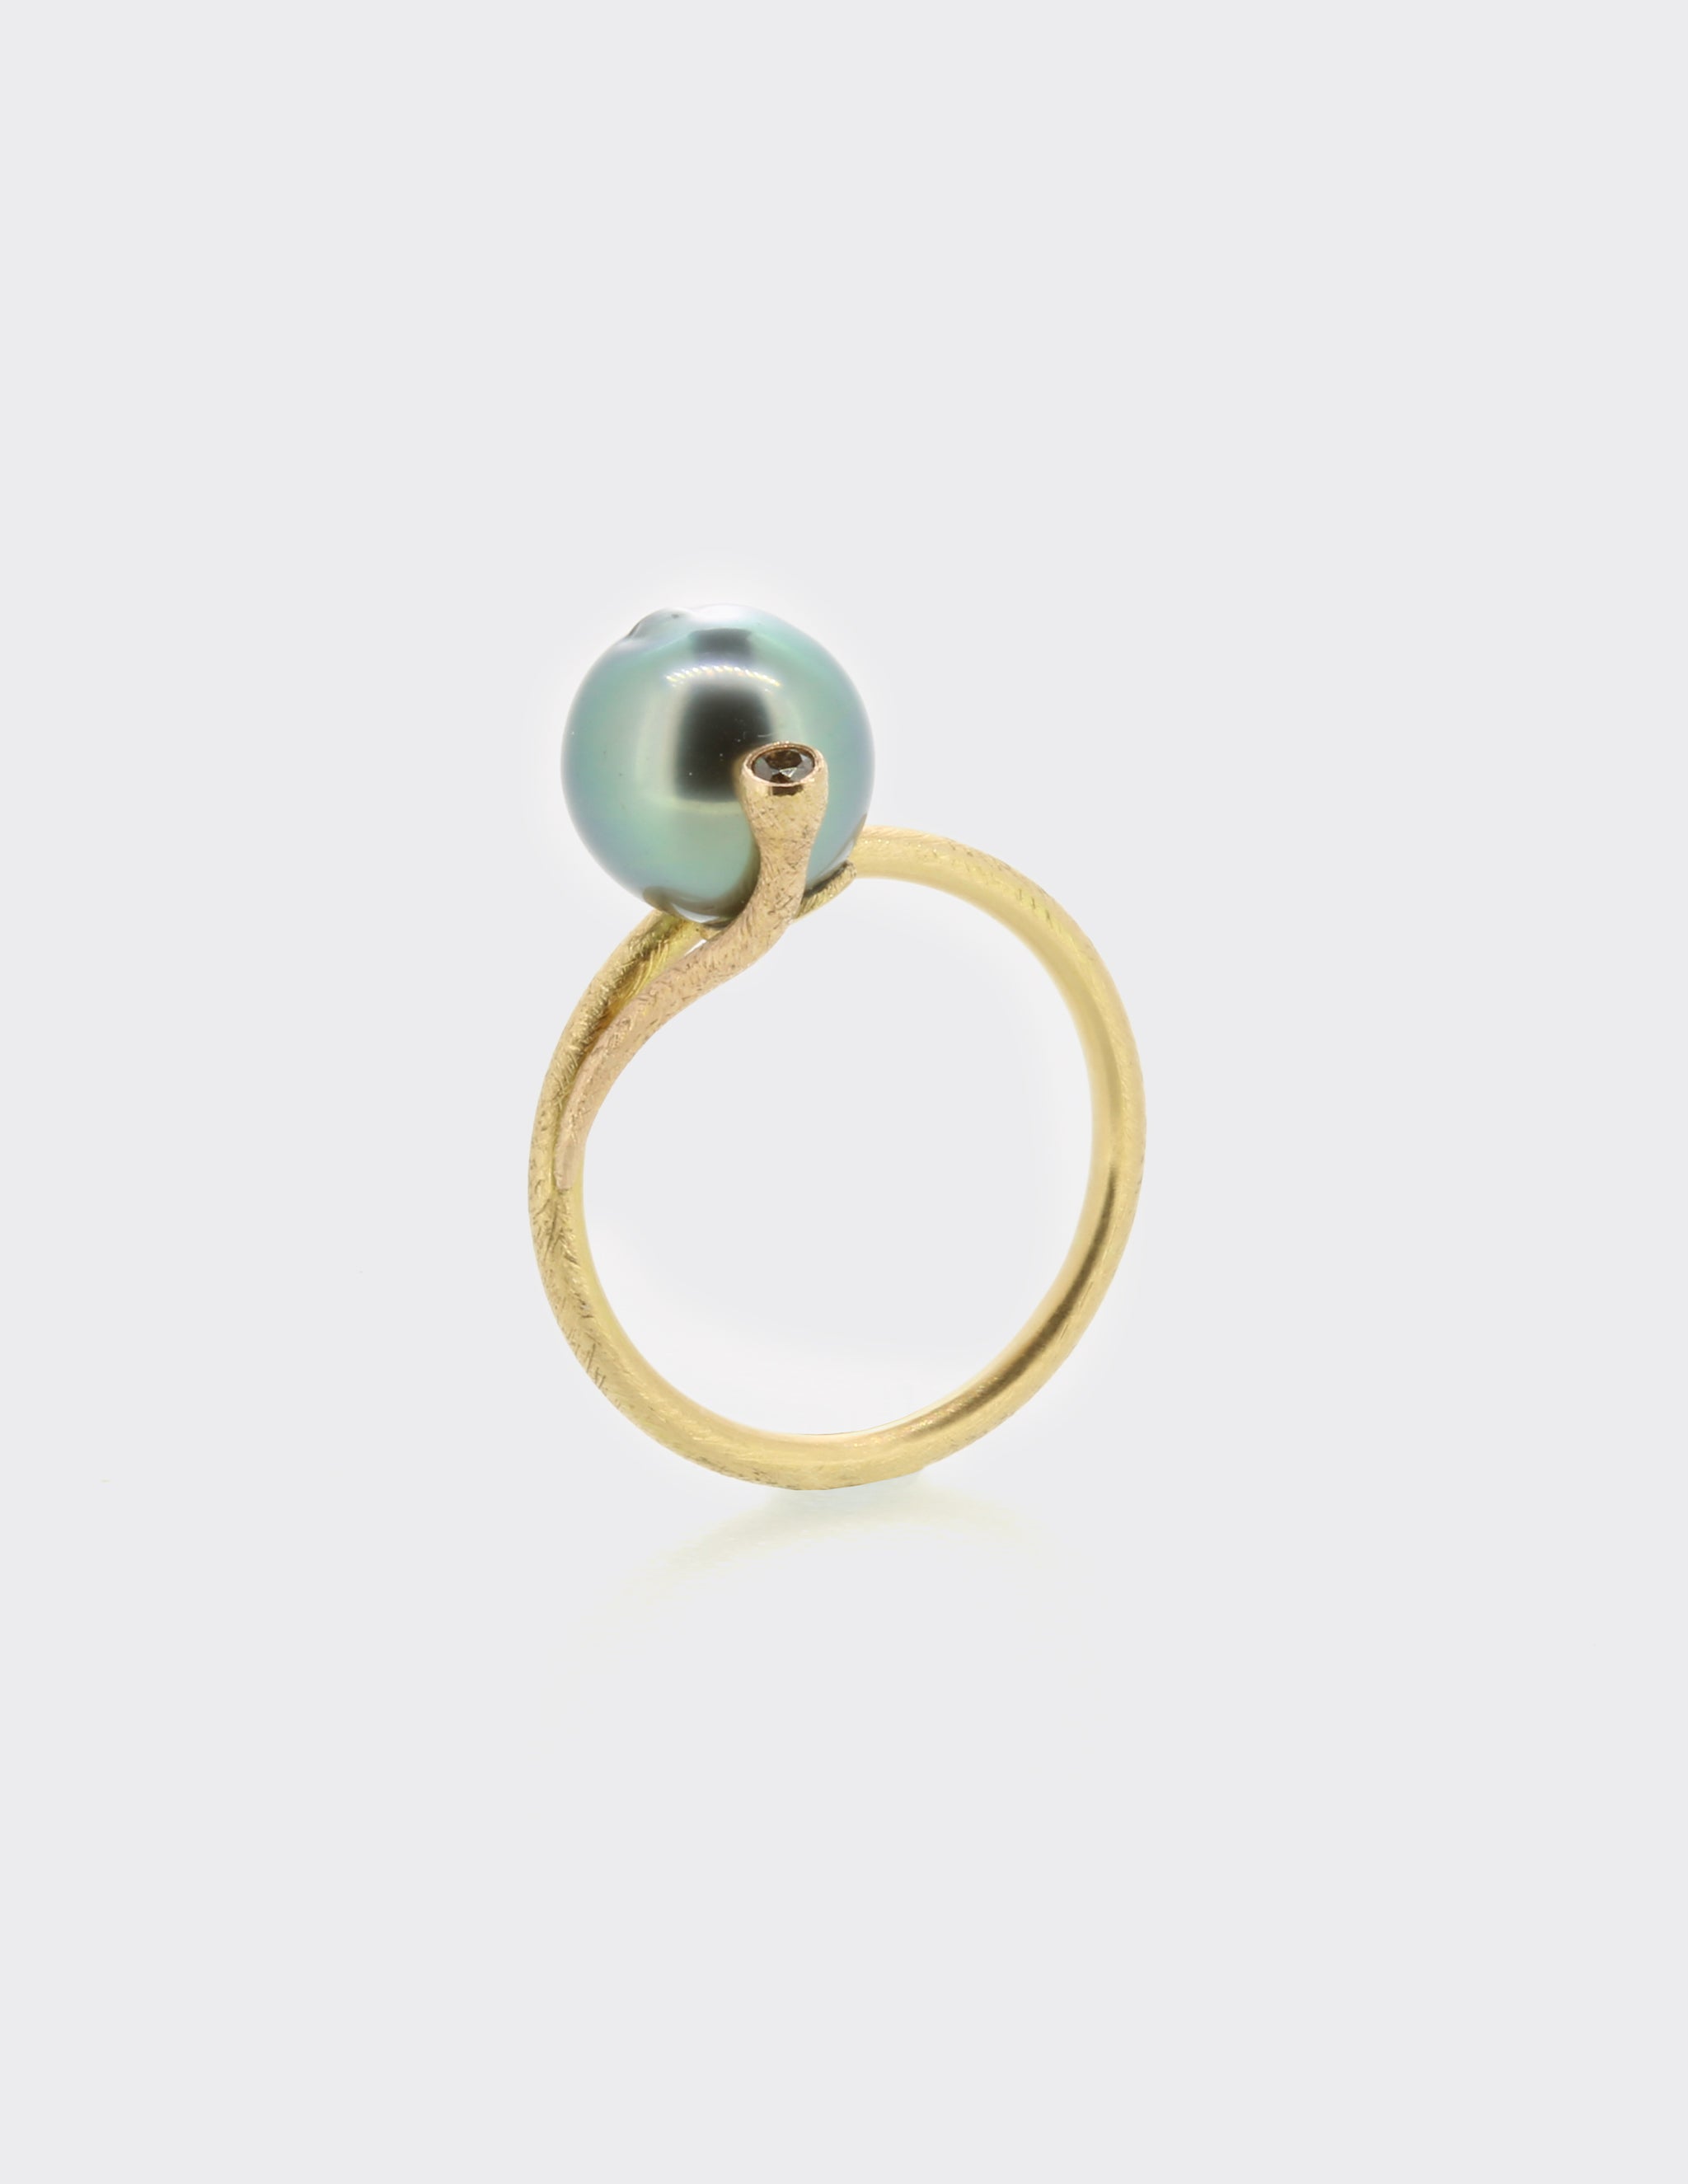 Single pearl and diamond ring